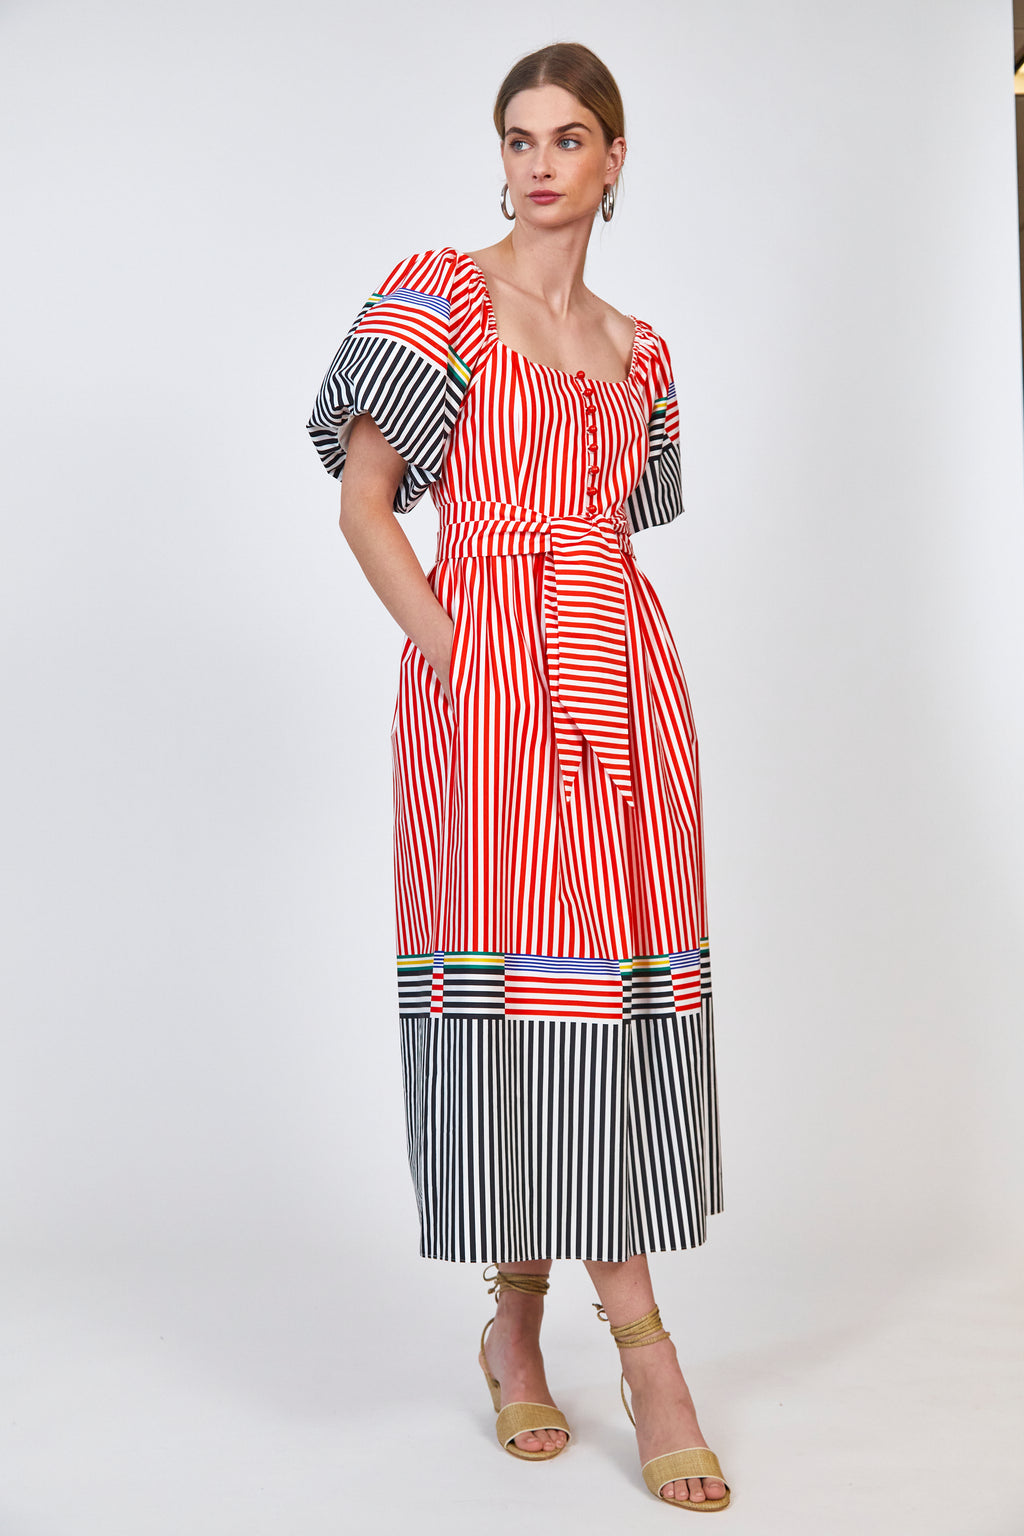 Hunter Bell Lucy Dress in Engineered Stripe